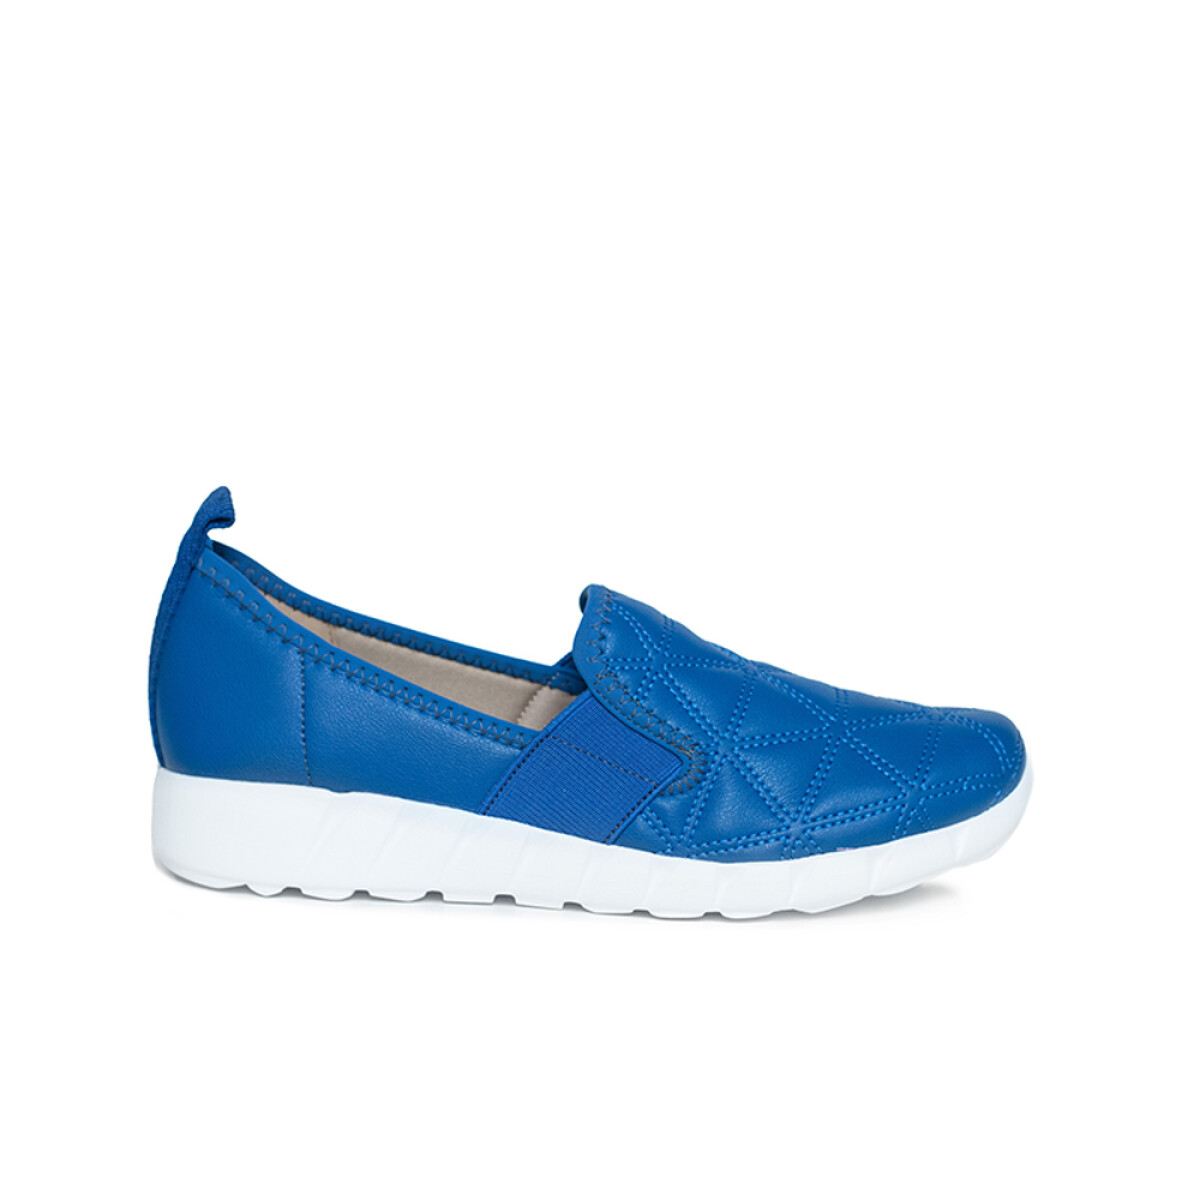 Calzado deportivo dama Piccadilly - Azul Cobalto 